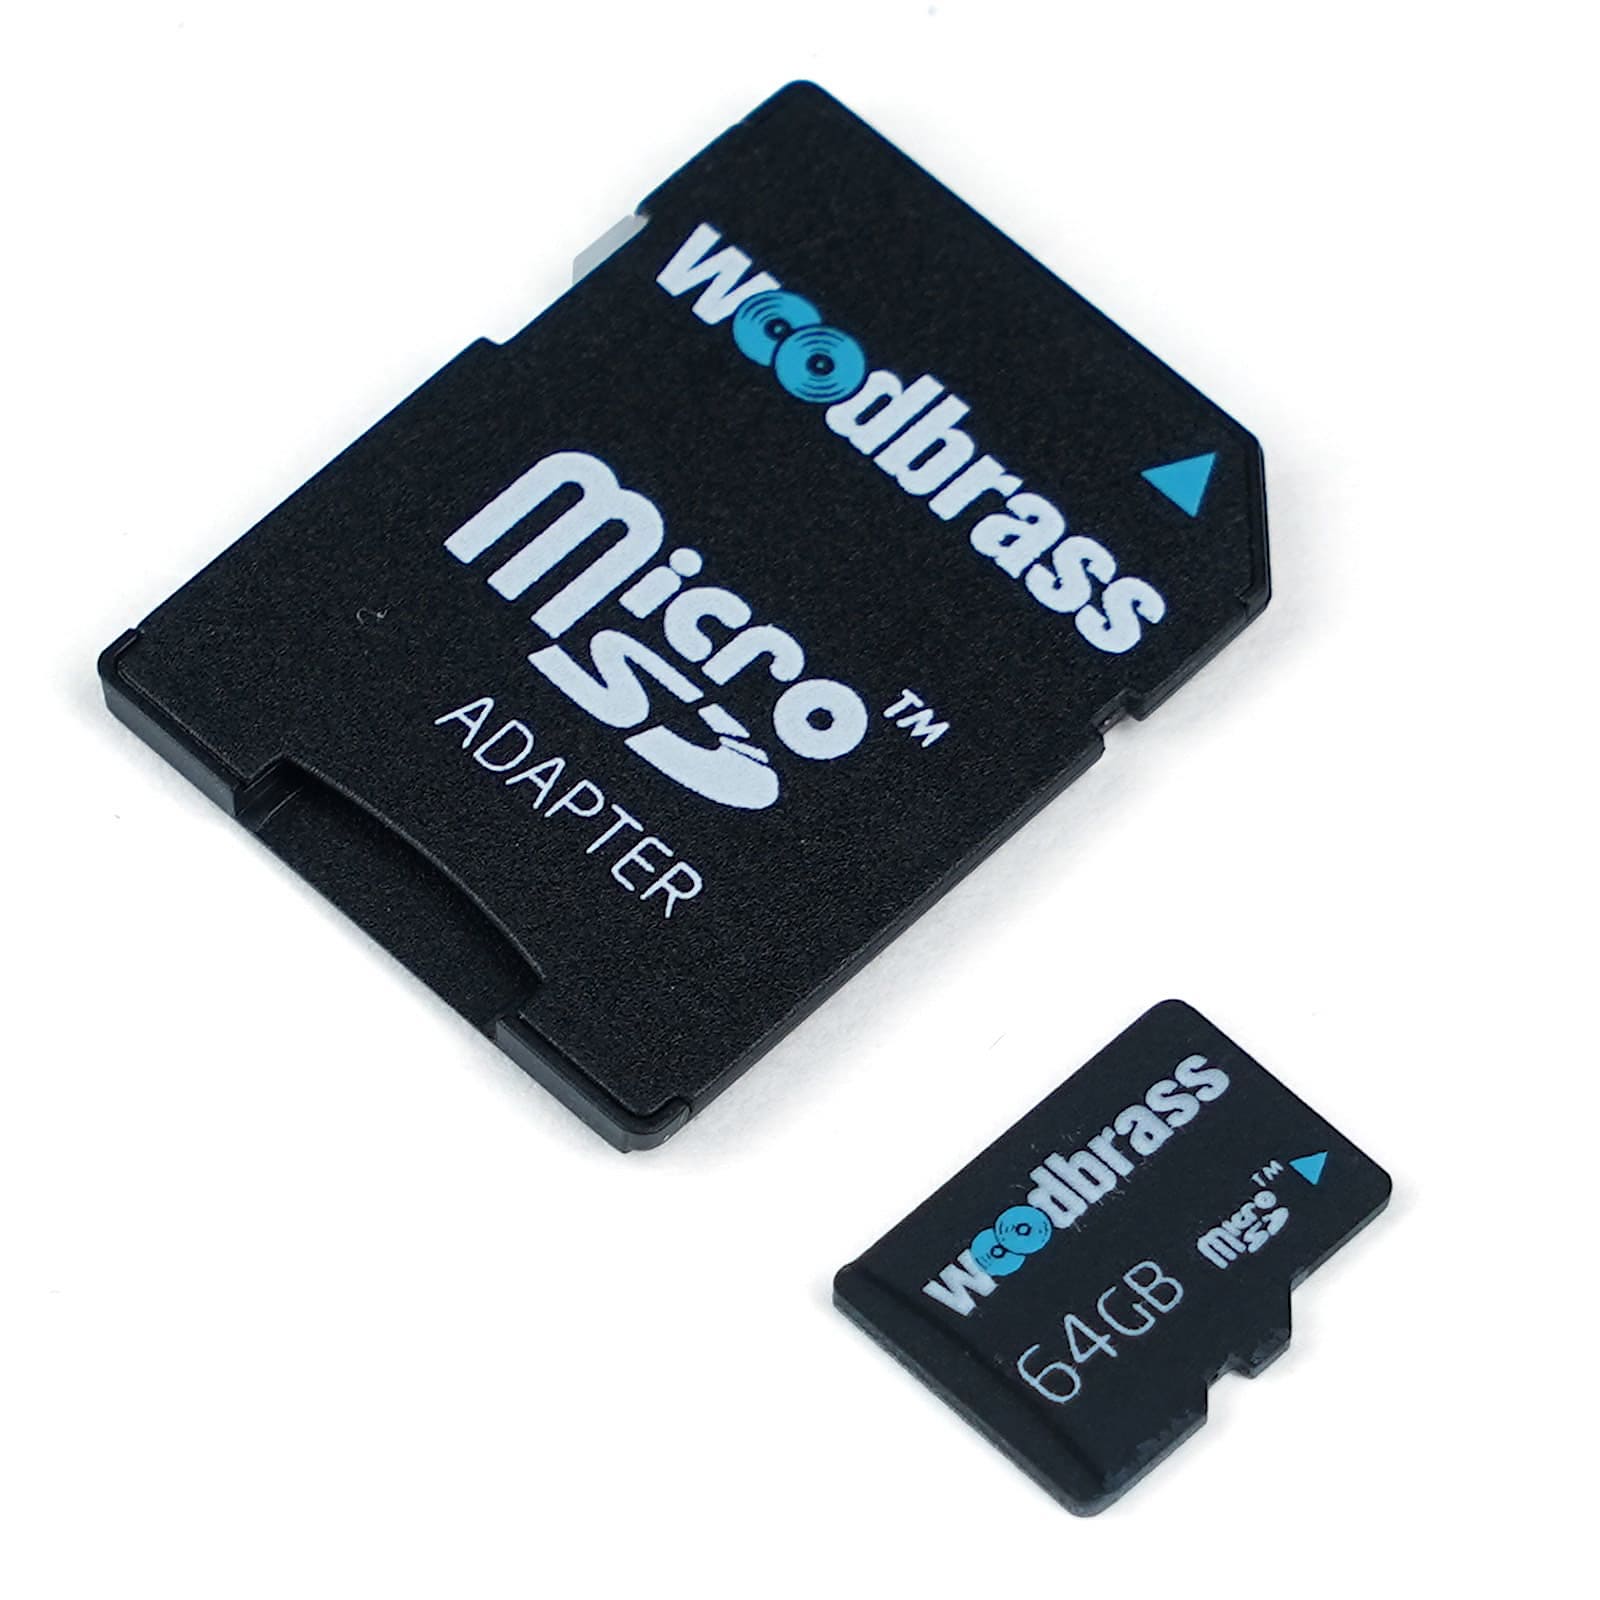 WOODBRASS 64GB SD CARD